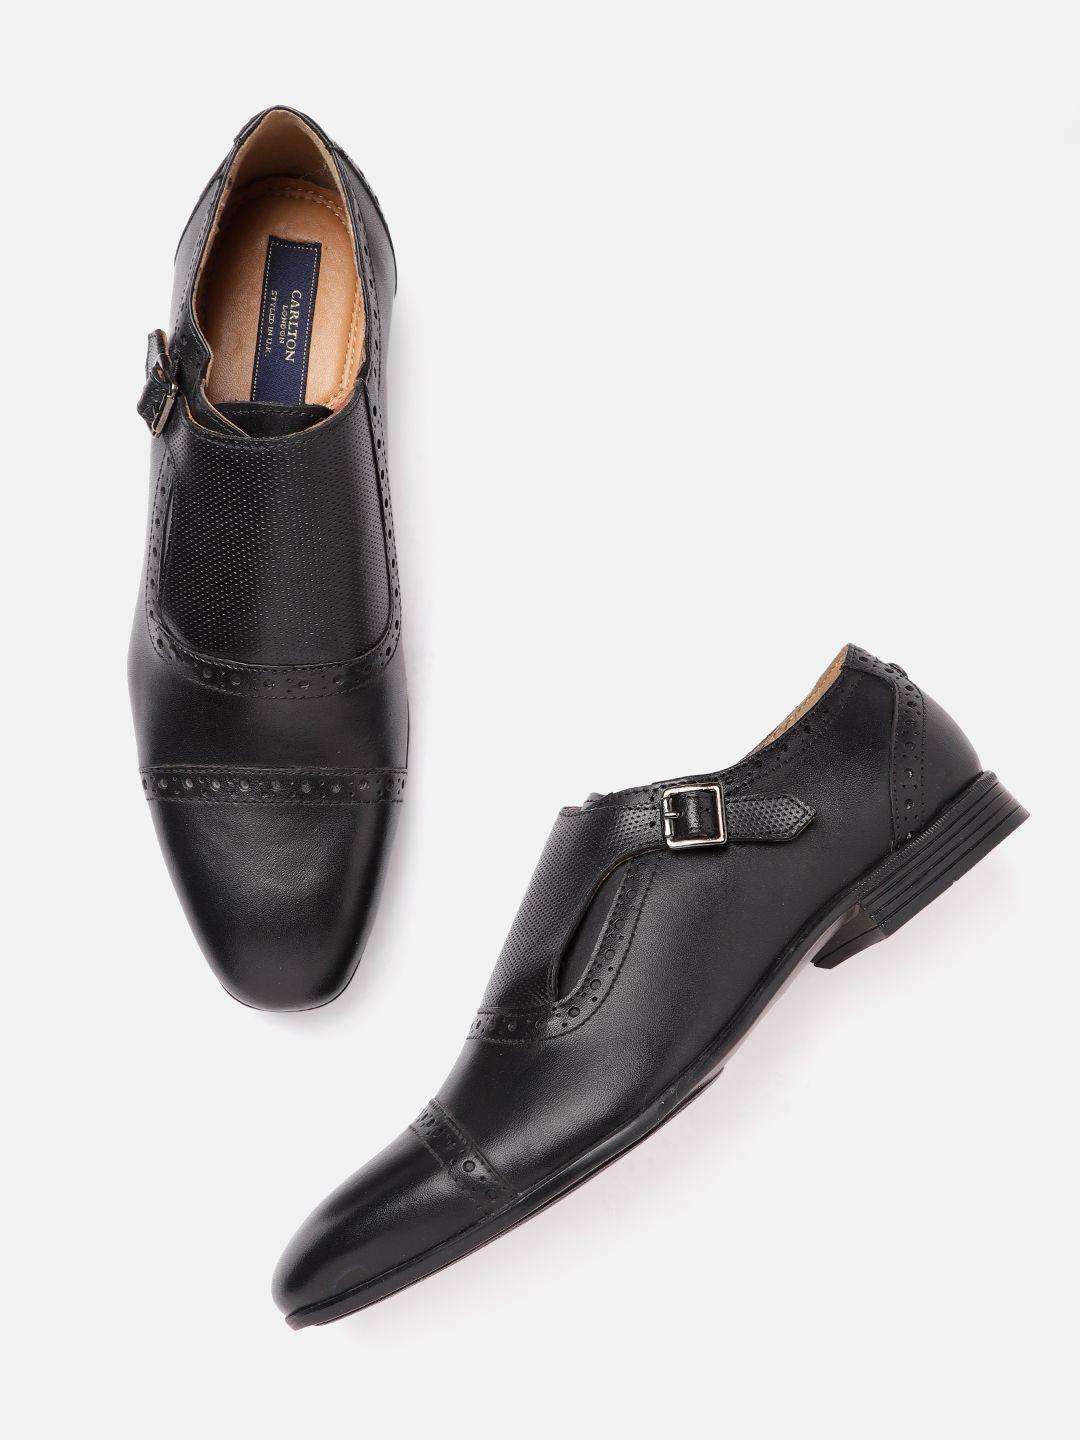 carlton london men black textured formal monk shoes